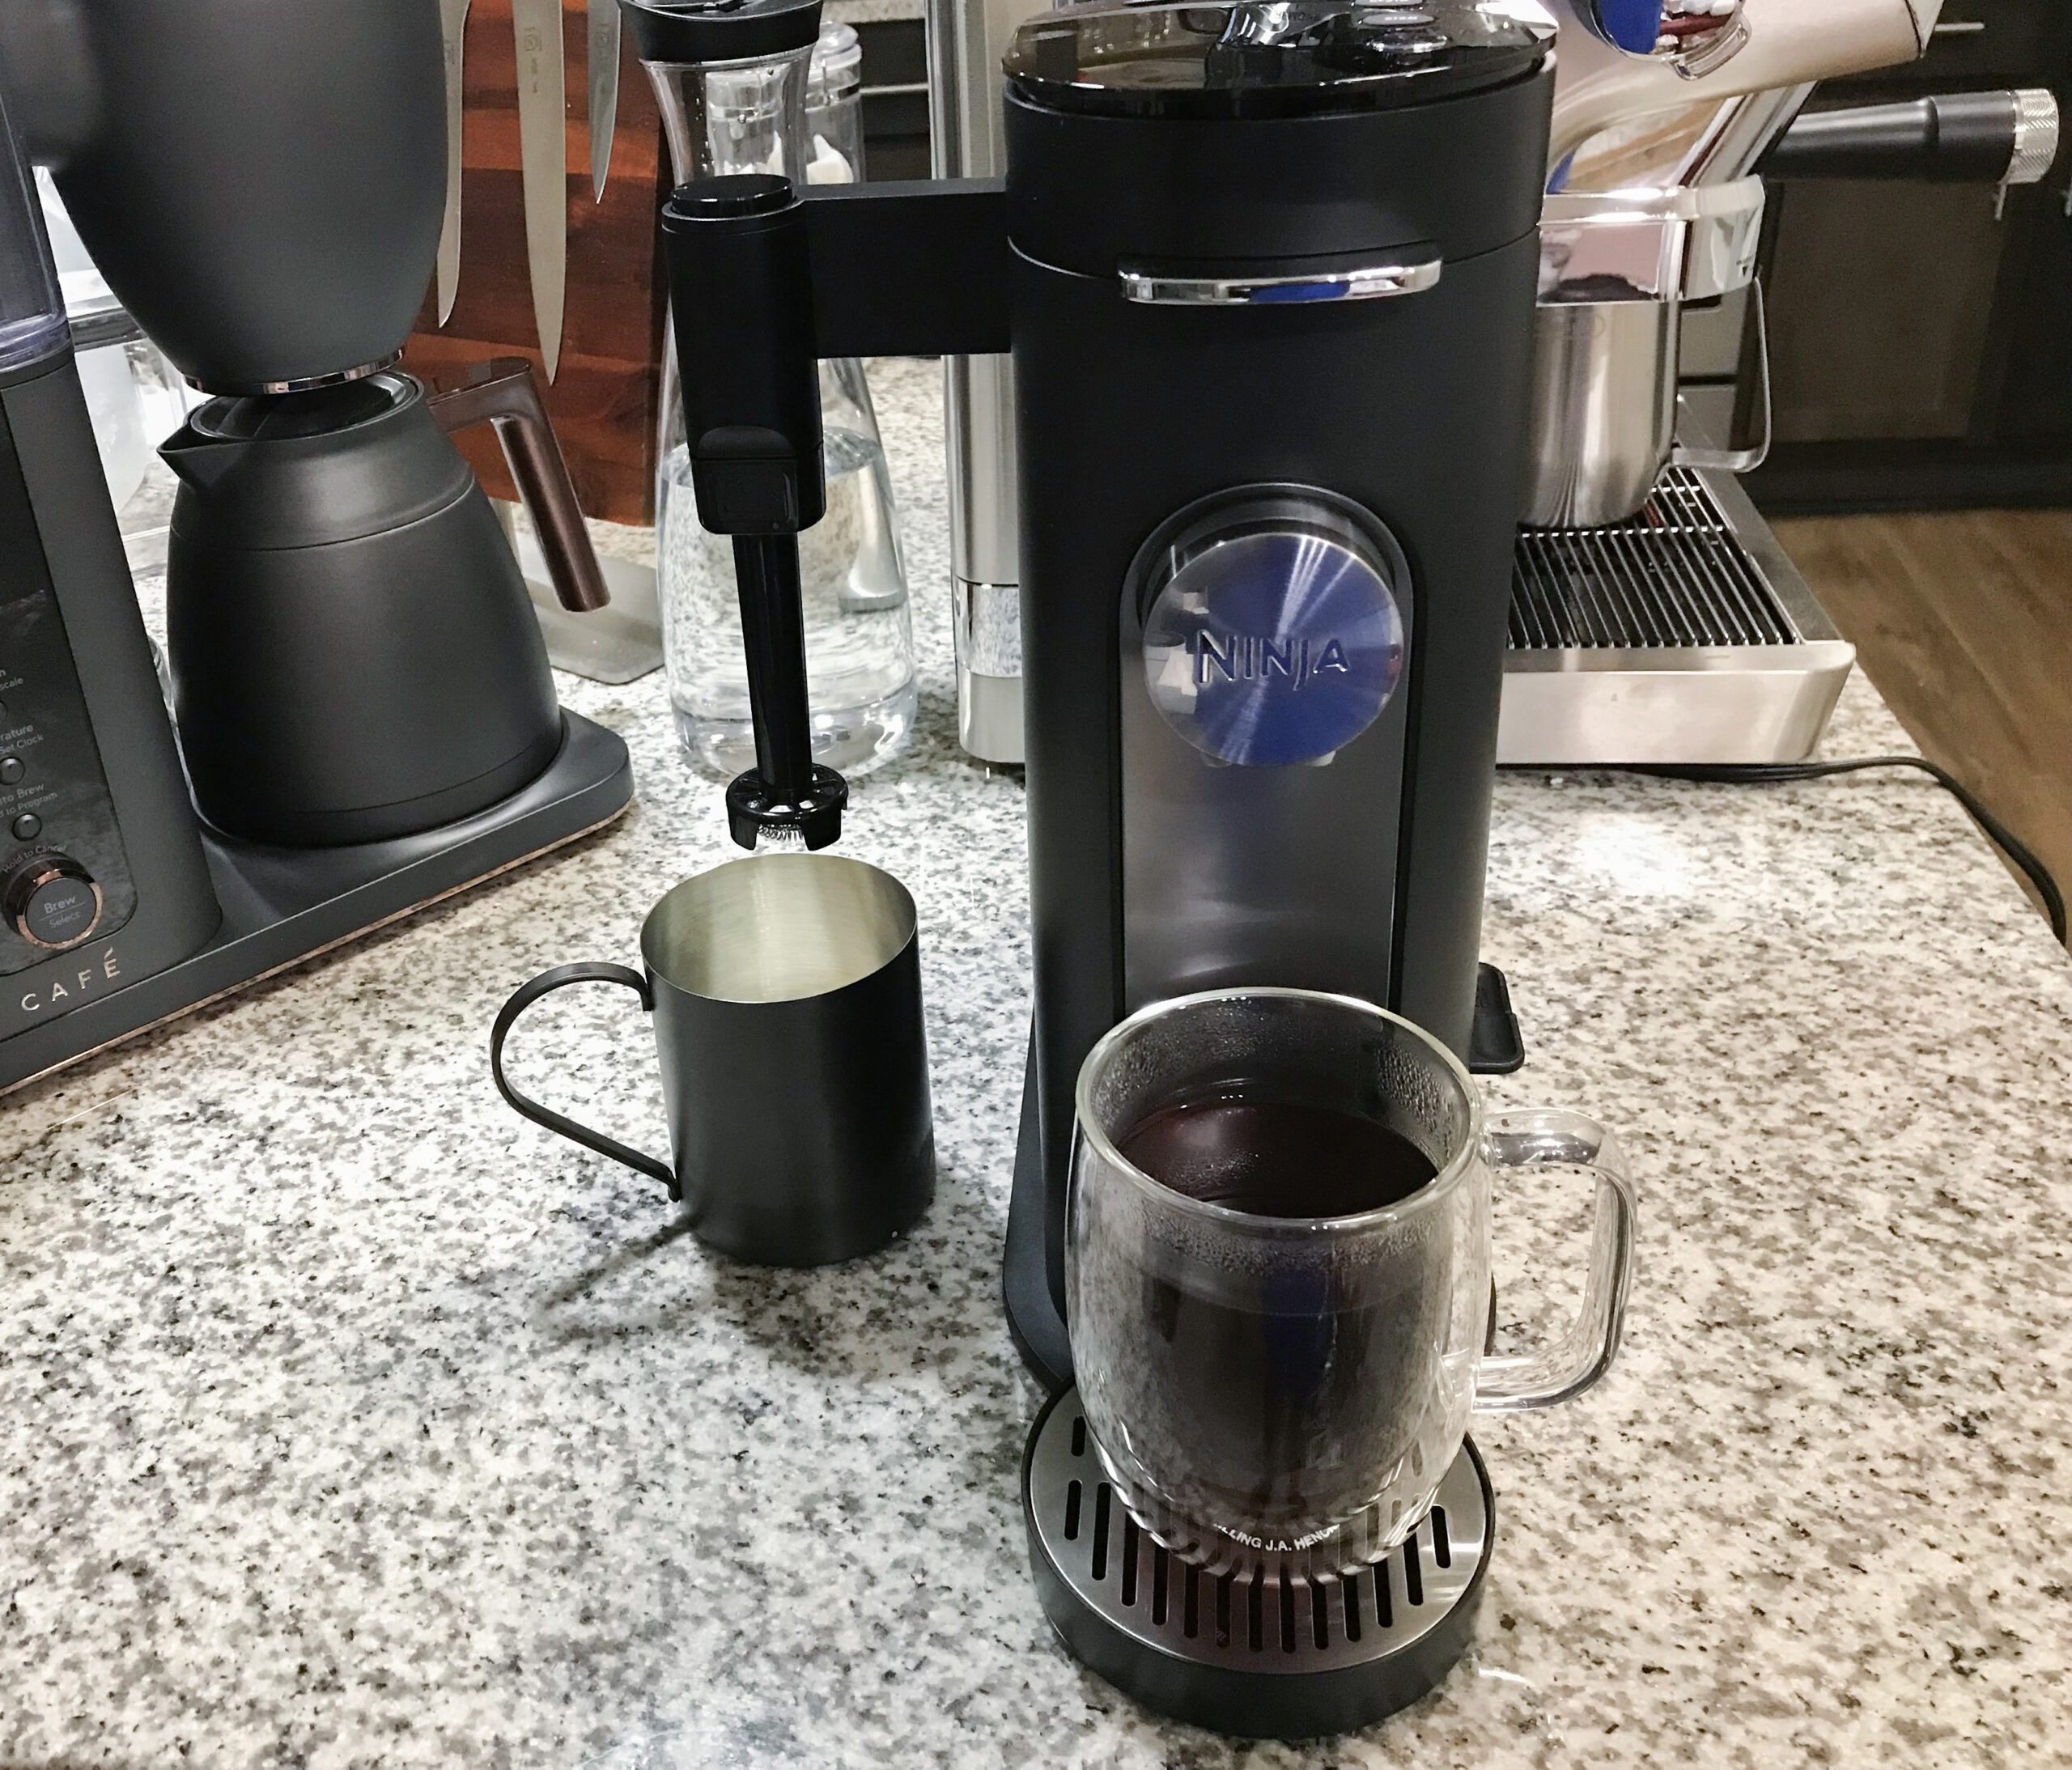 https://www.popsci.com/uploads/2023/08/01/Ninja-Pods-and-Grounds-drip-coffee-maker-scaled.jpeg?auto=webp&width=800&crop=16:10,offset-x50